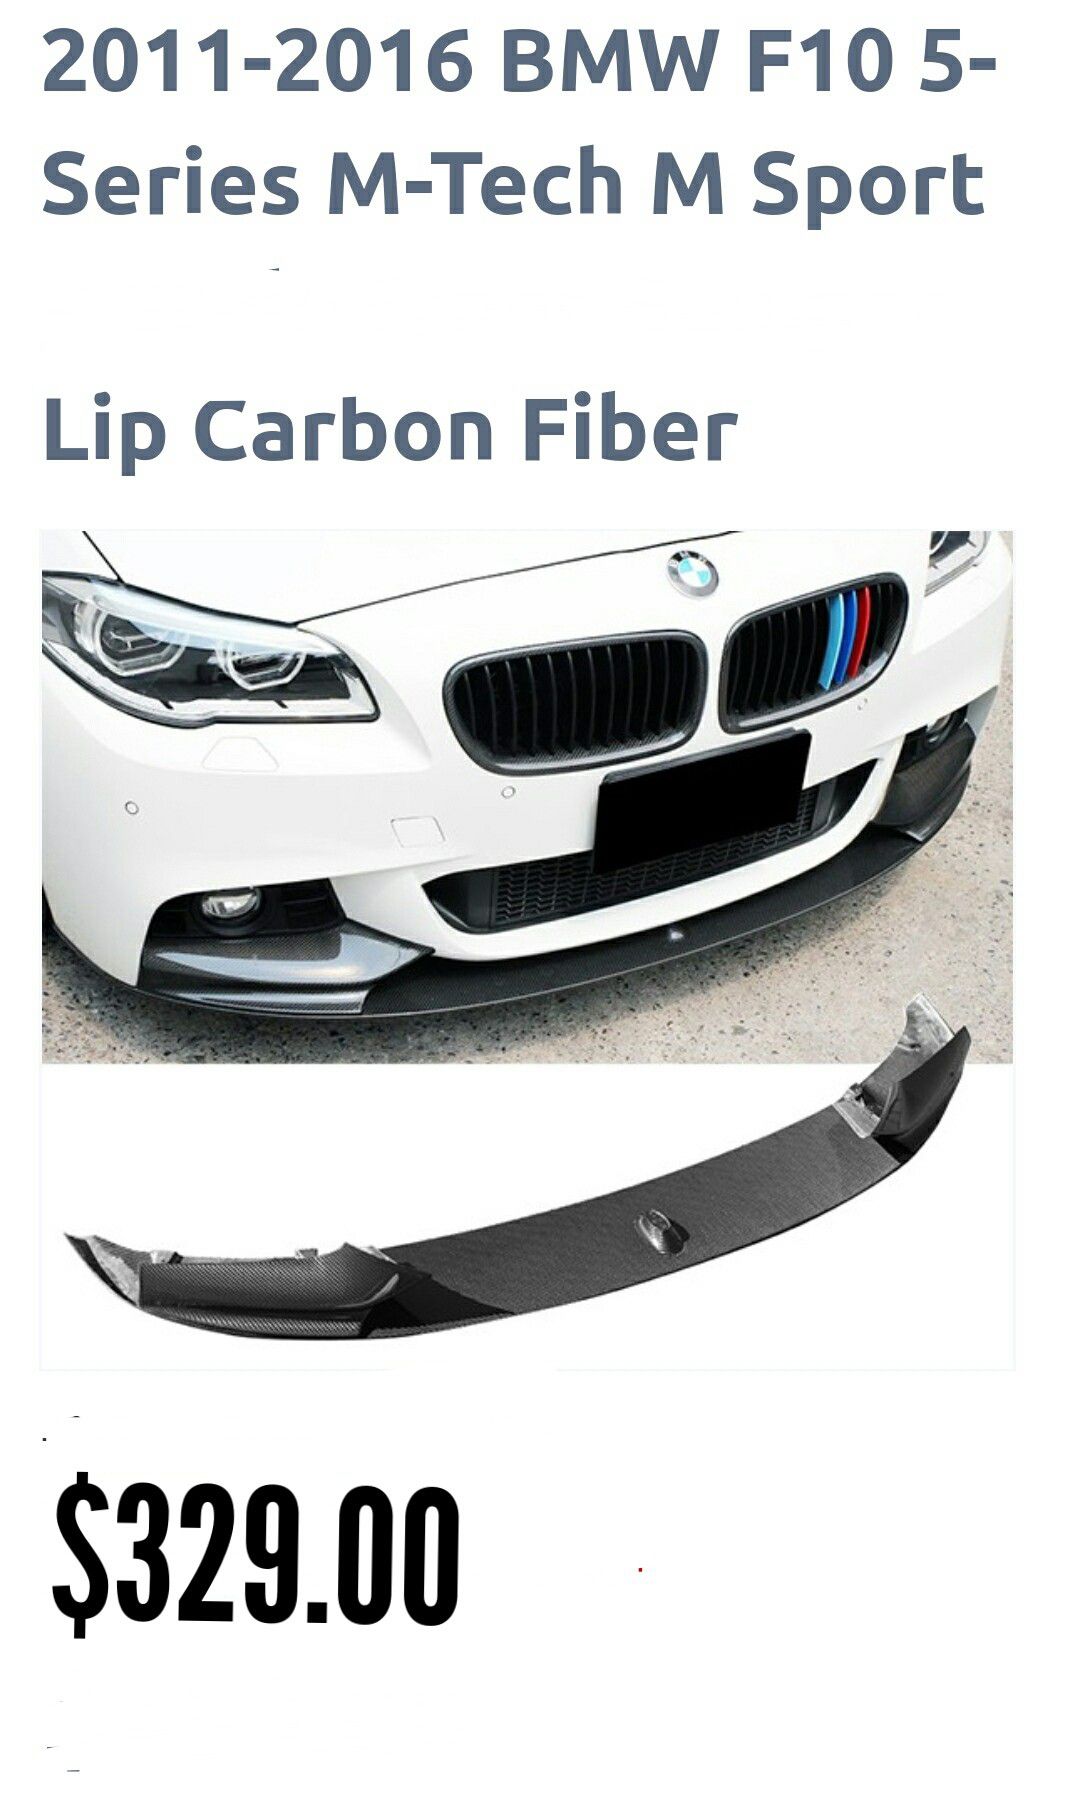 2011-2016 BMW F10 5 SERIES CARBON FIBER LIP, M-TEC STYLE